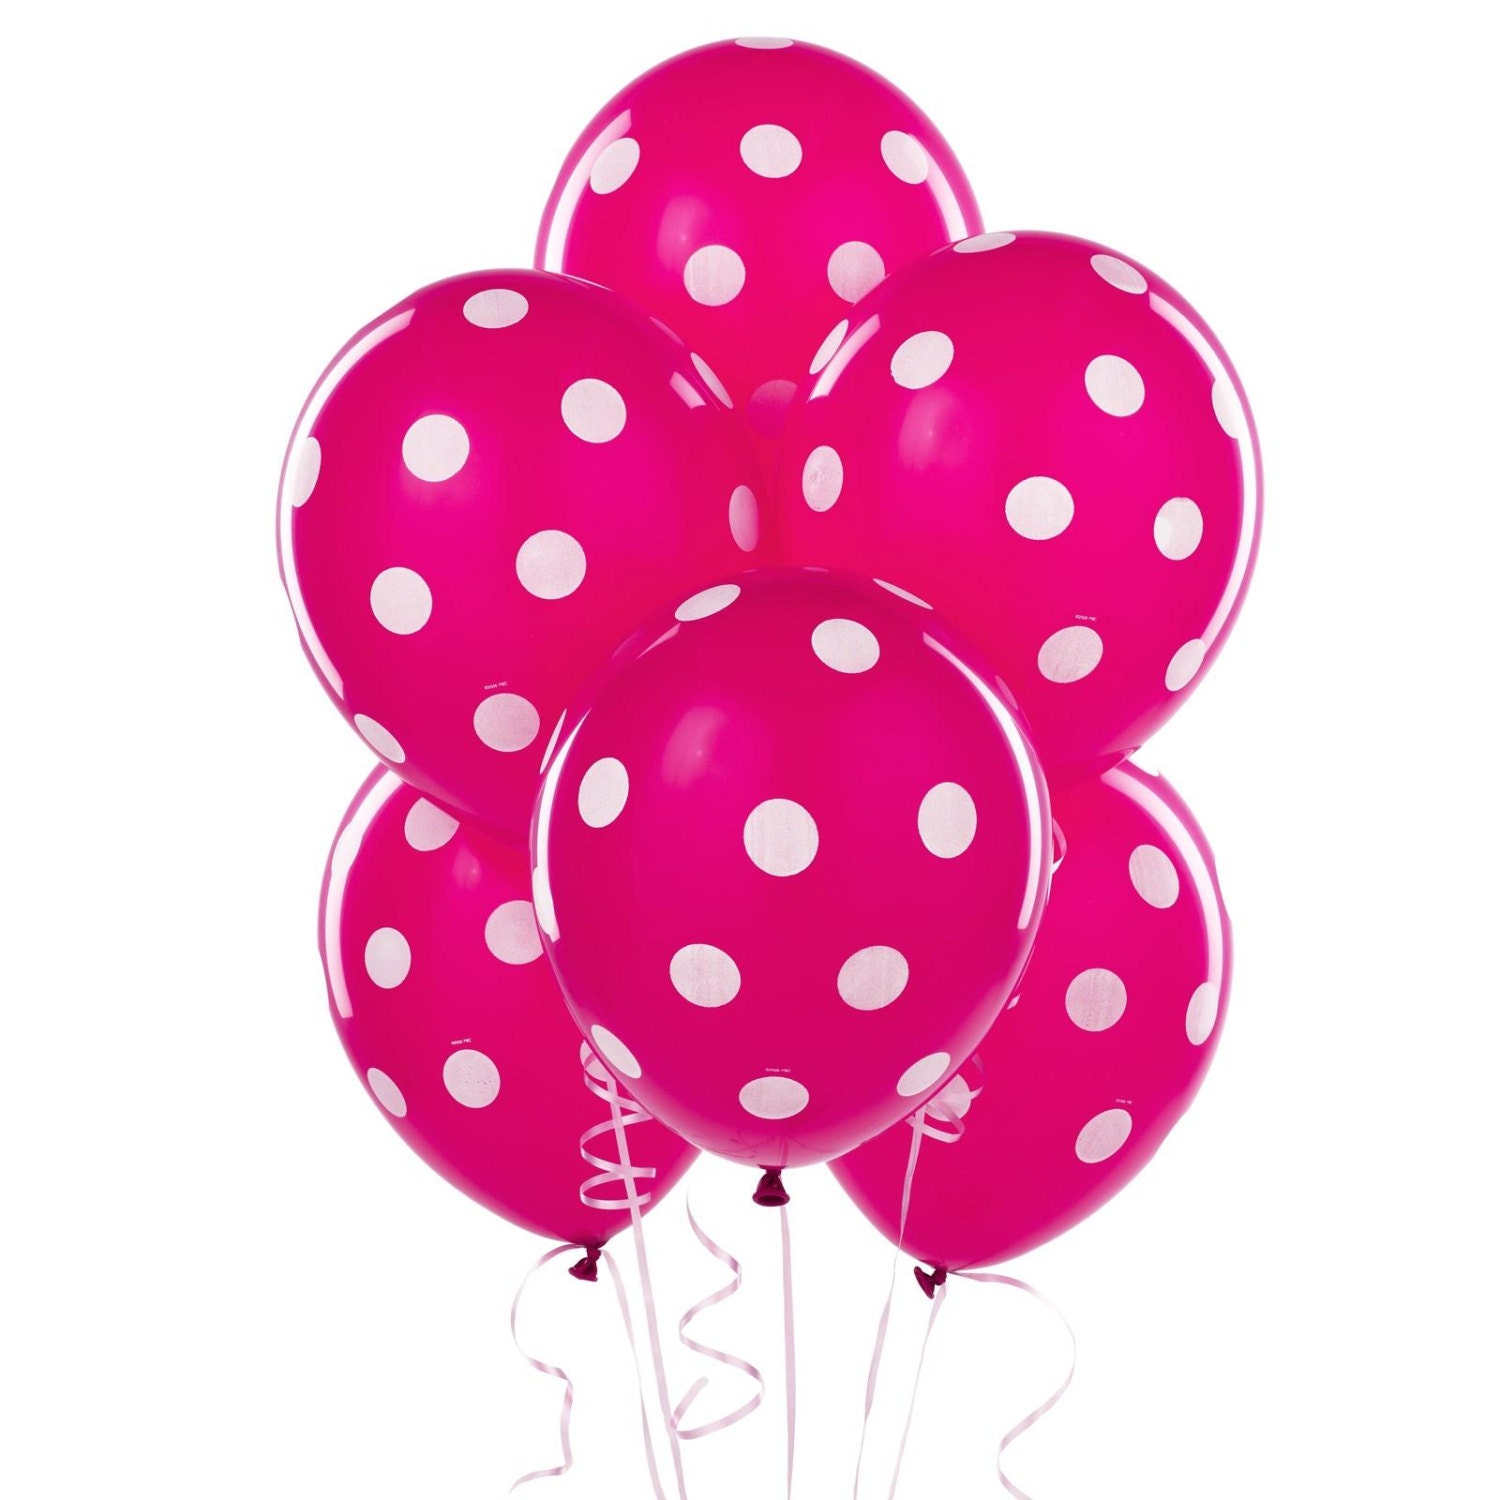 Inspiration 27 Hot Pink Balloons 